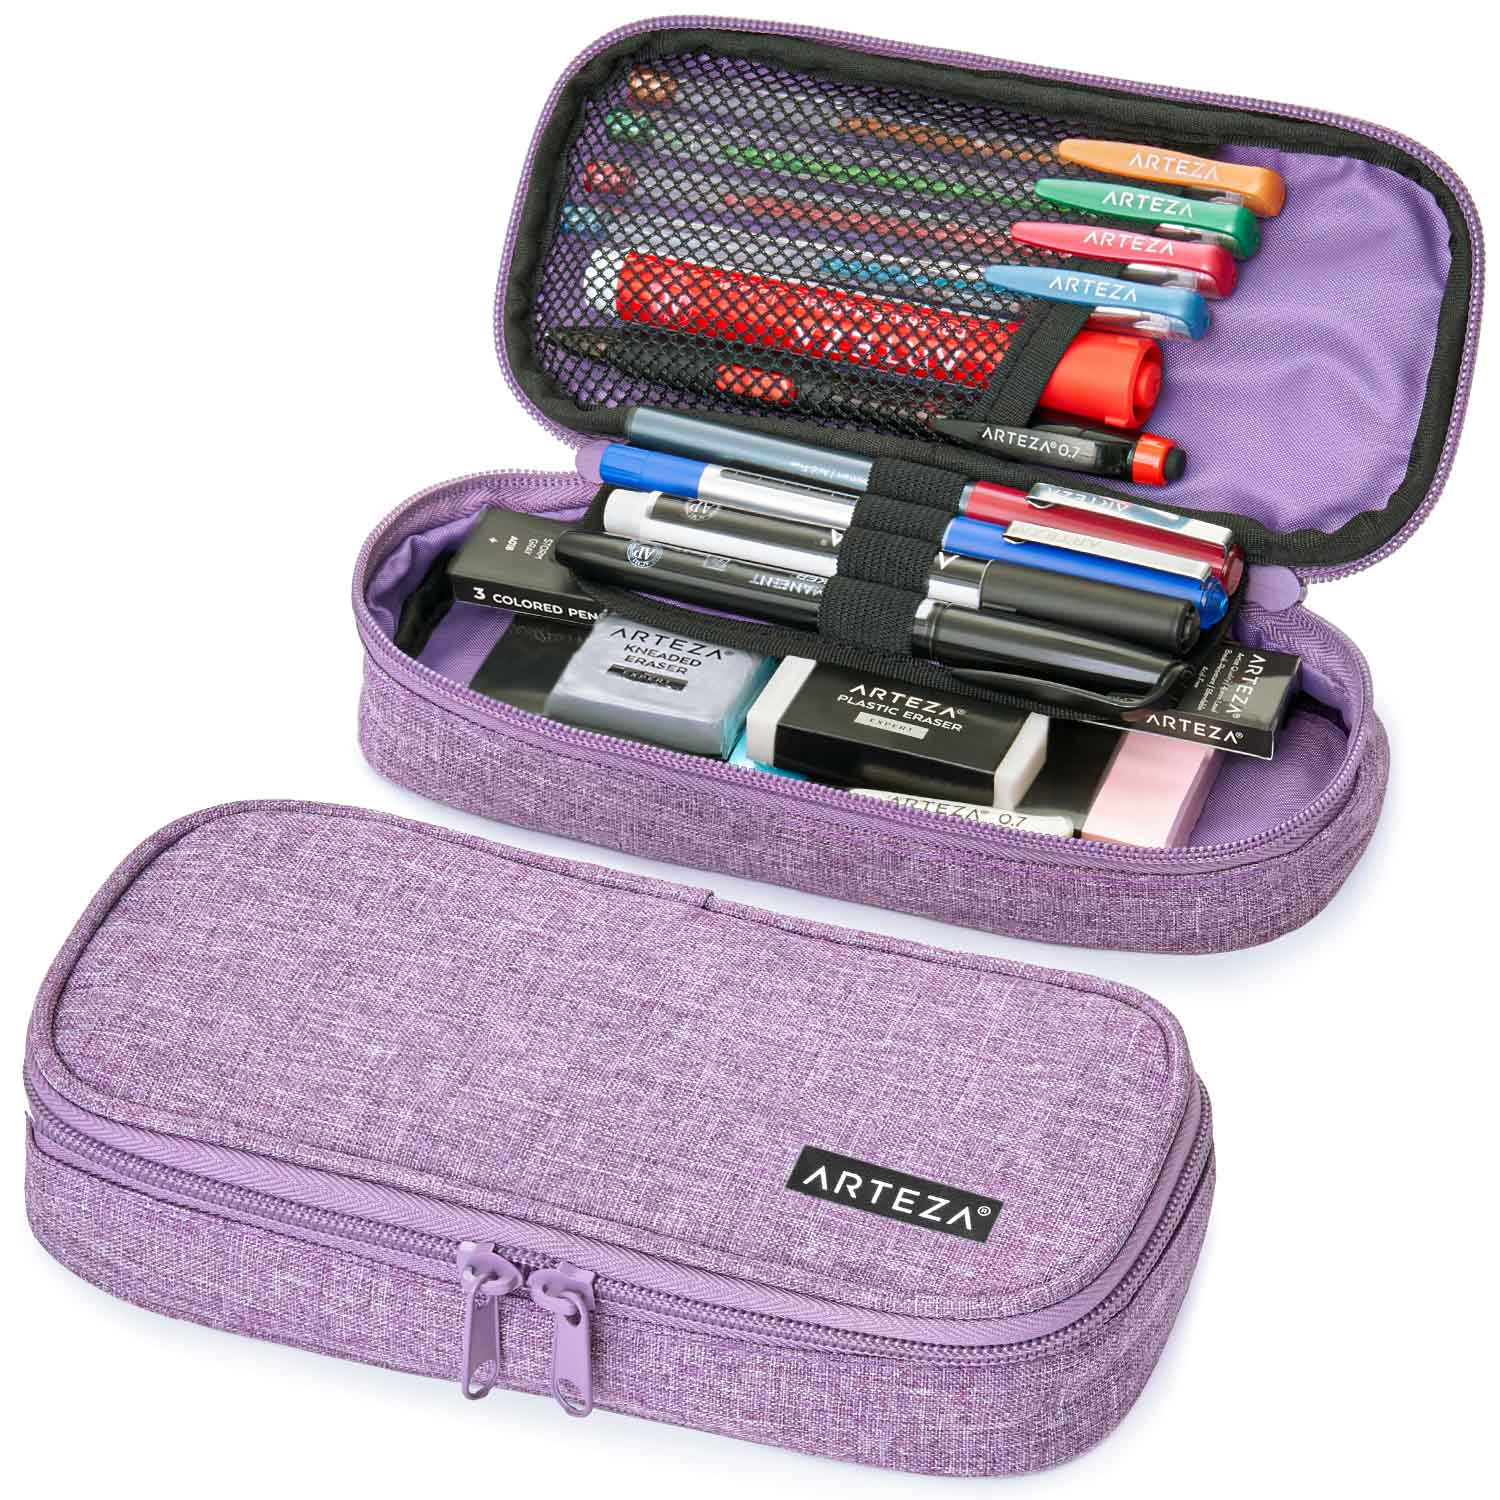 Glitter Pencil Case, Large Pencil Case, Canvas Pencil Cases, Craft